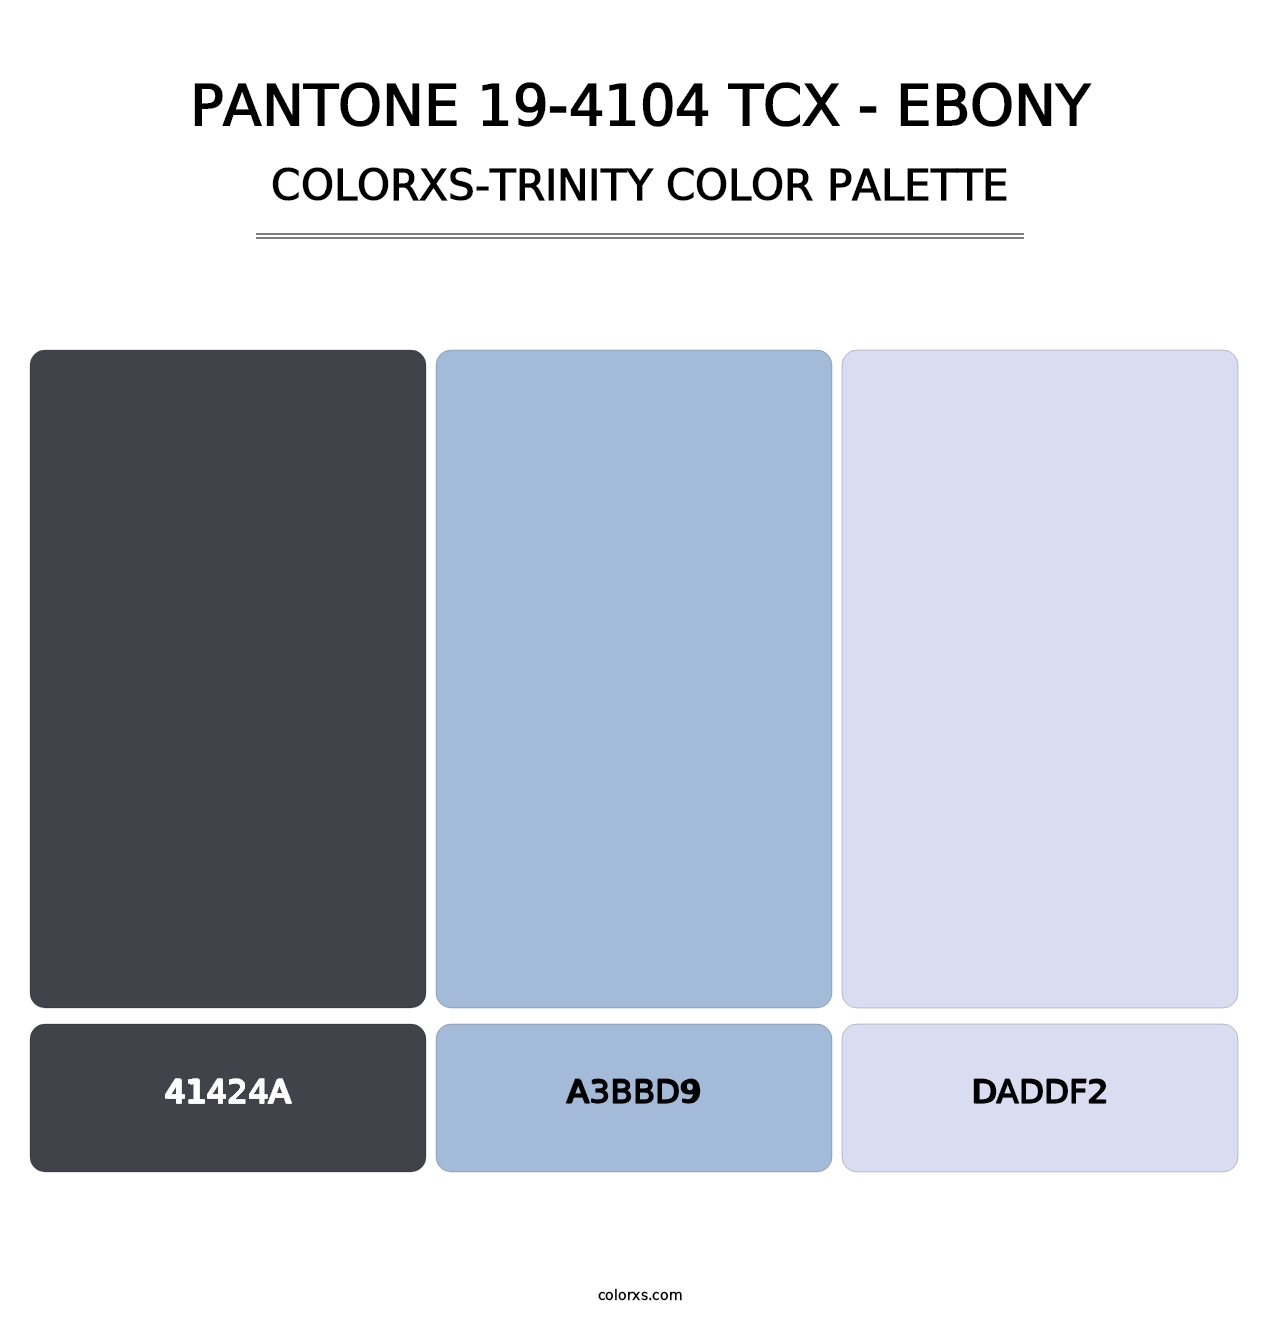 PANTONE 19-4104 TCX - Ebony - Colorxs Trinity Palette